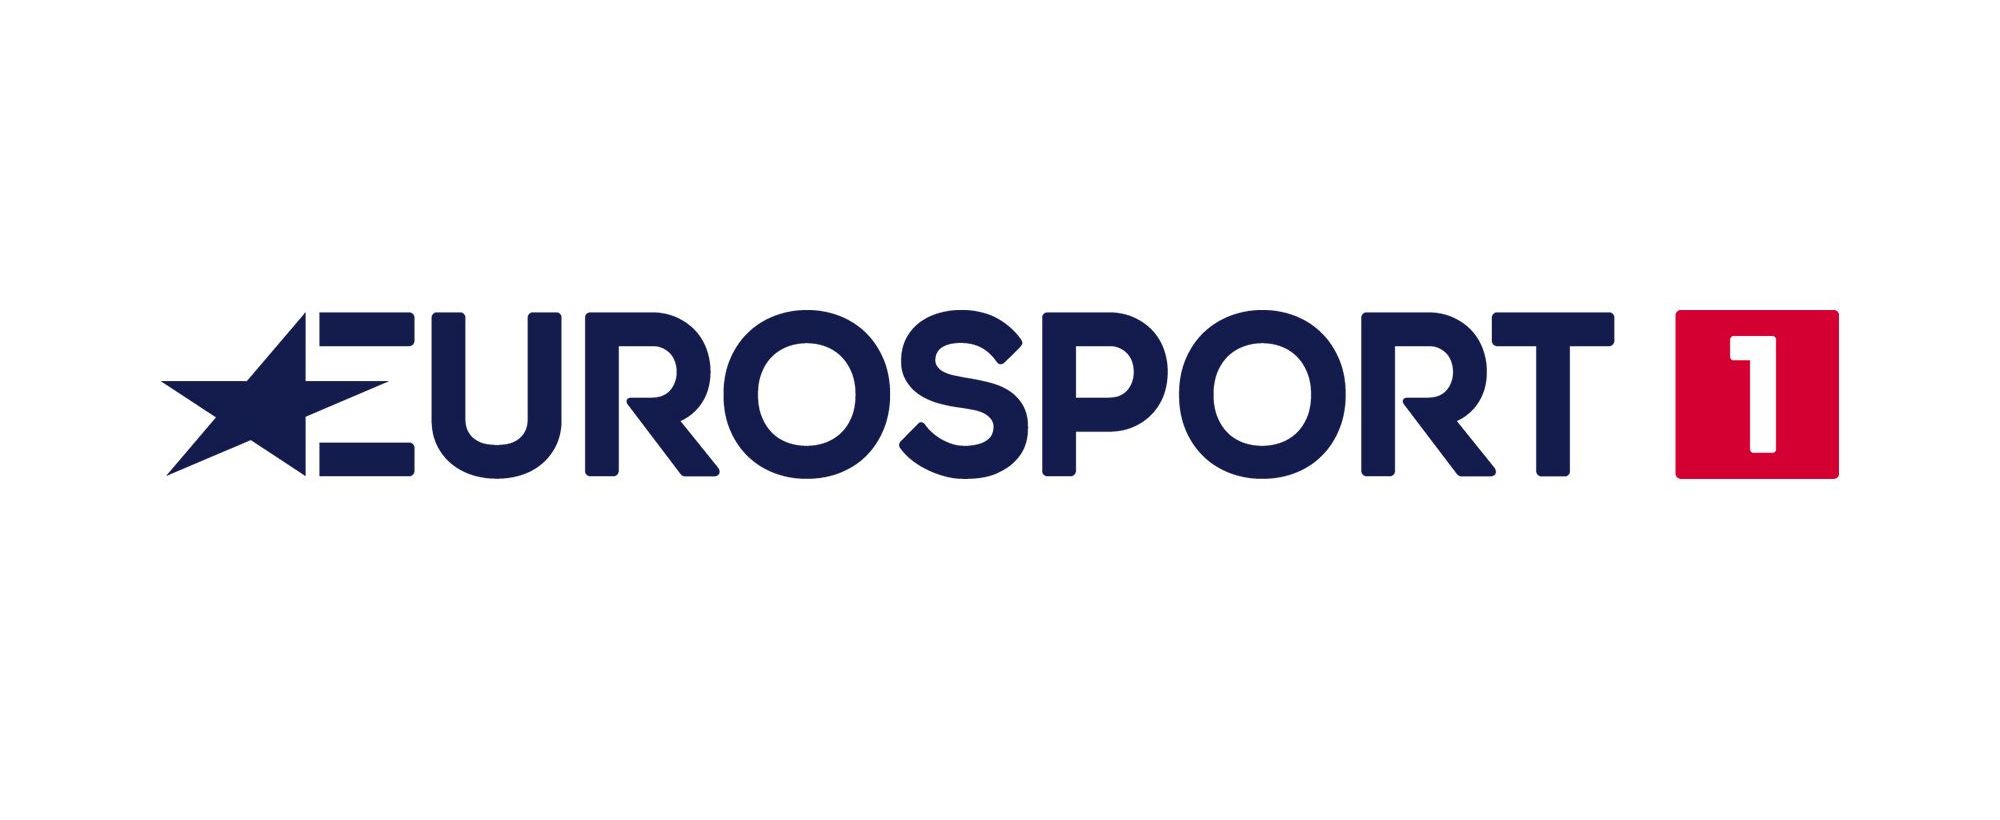 Eurosport 1 - Program TV